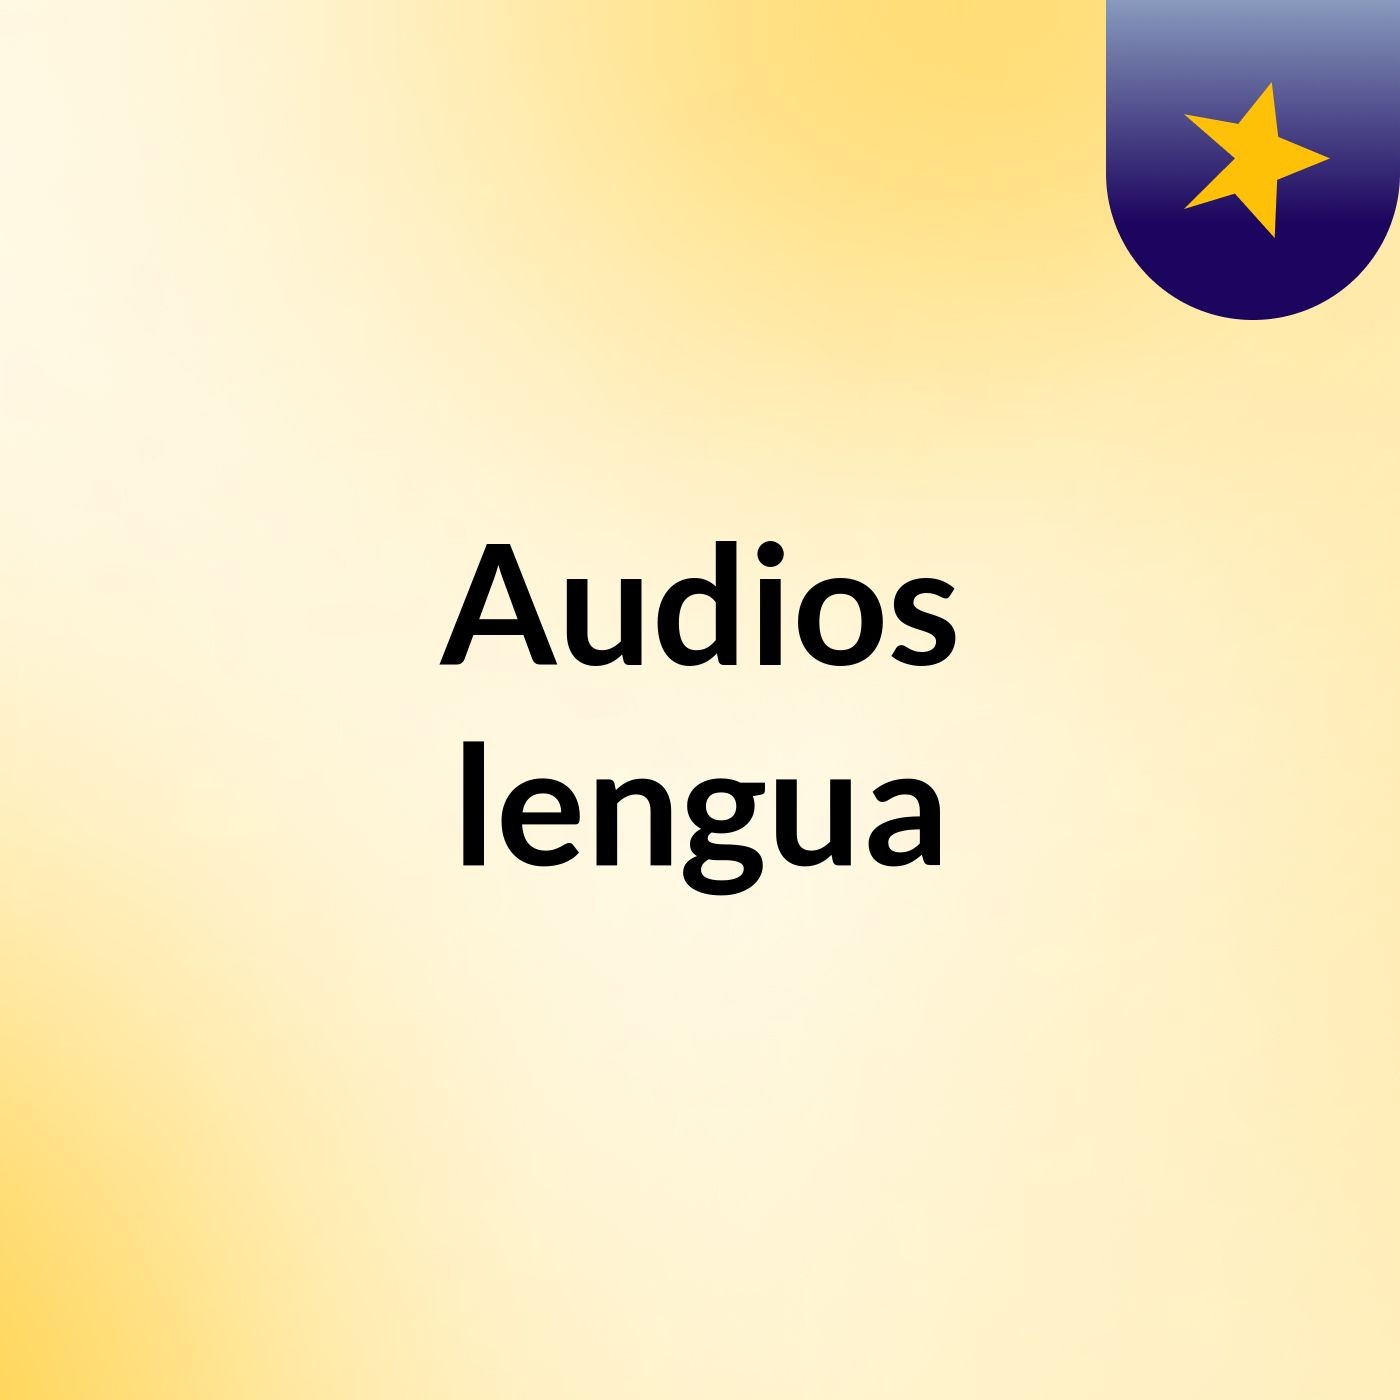 Audios lengua